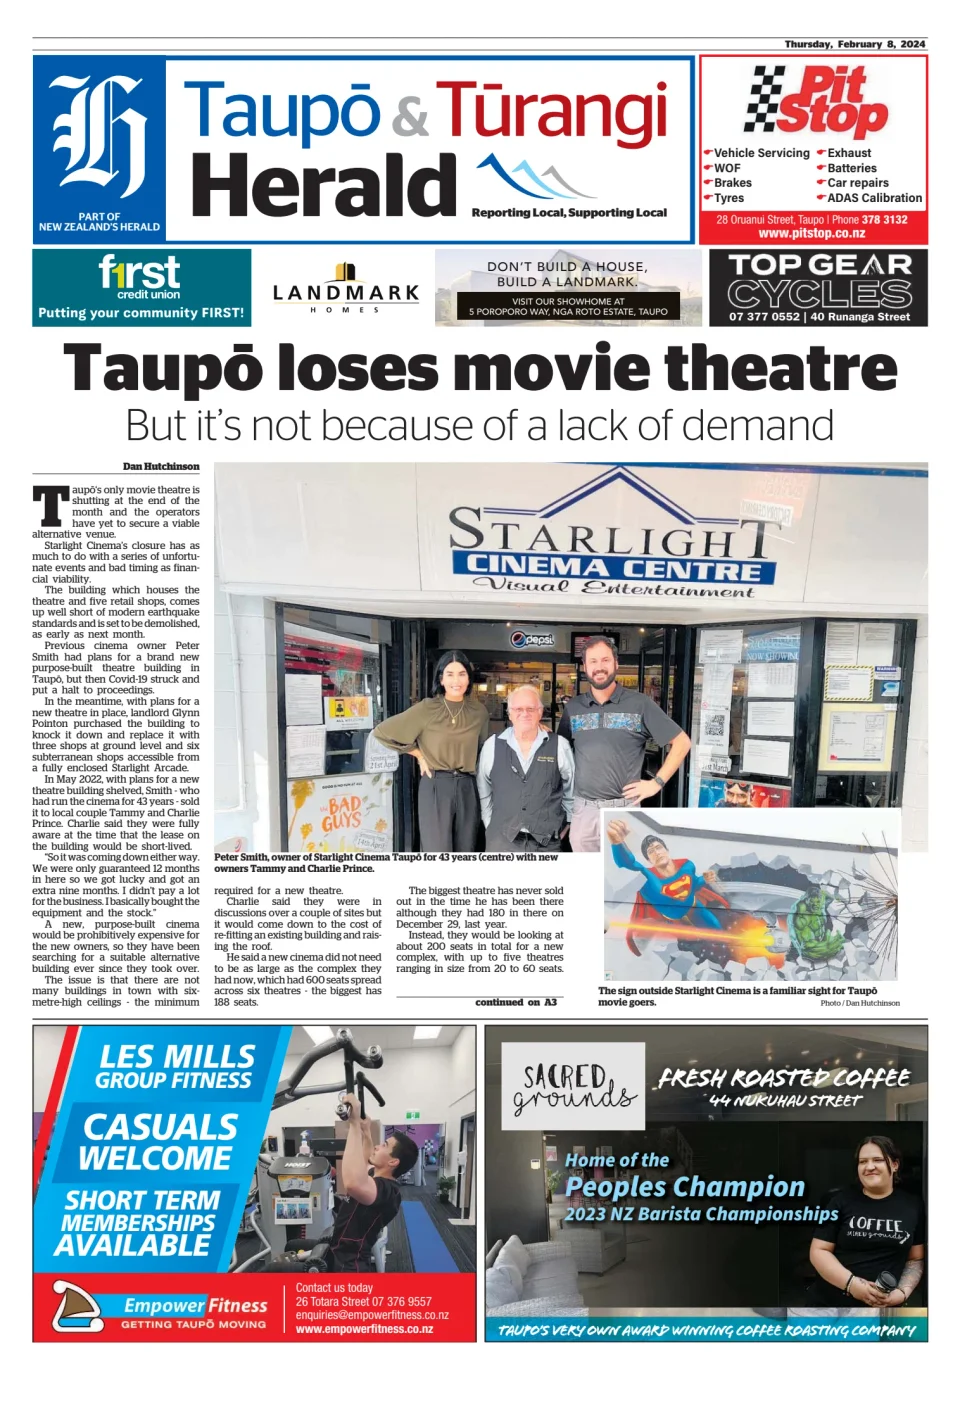 Taupo & Turangi Herald